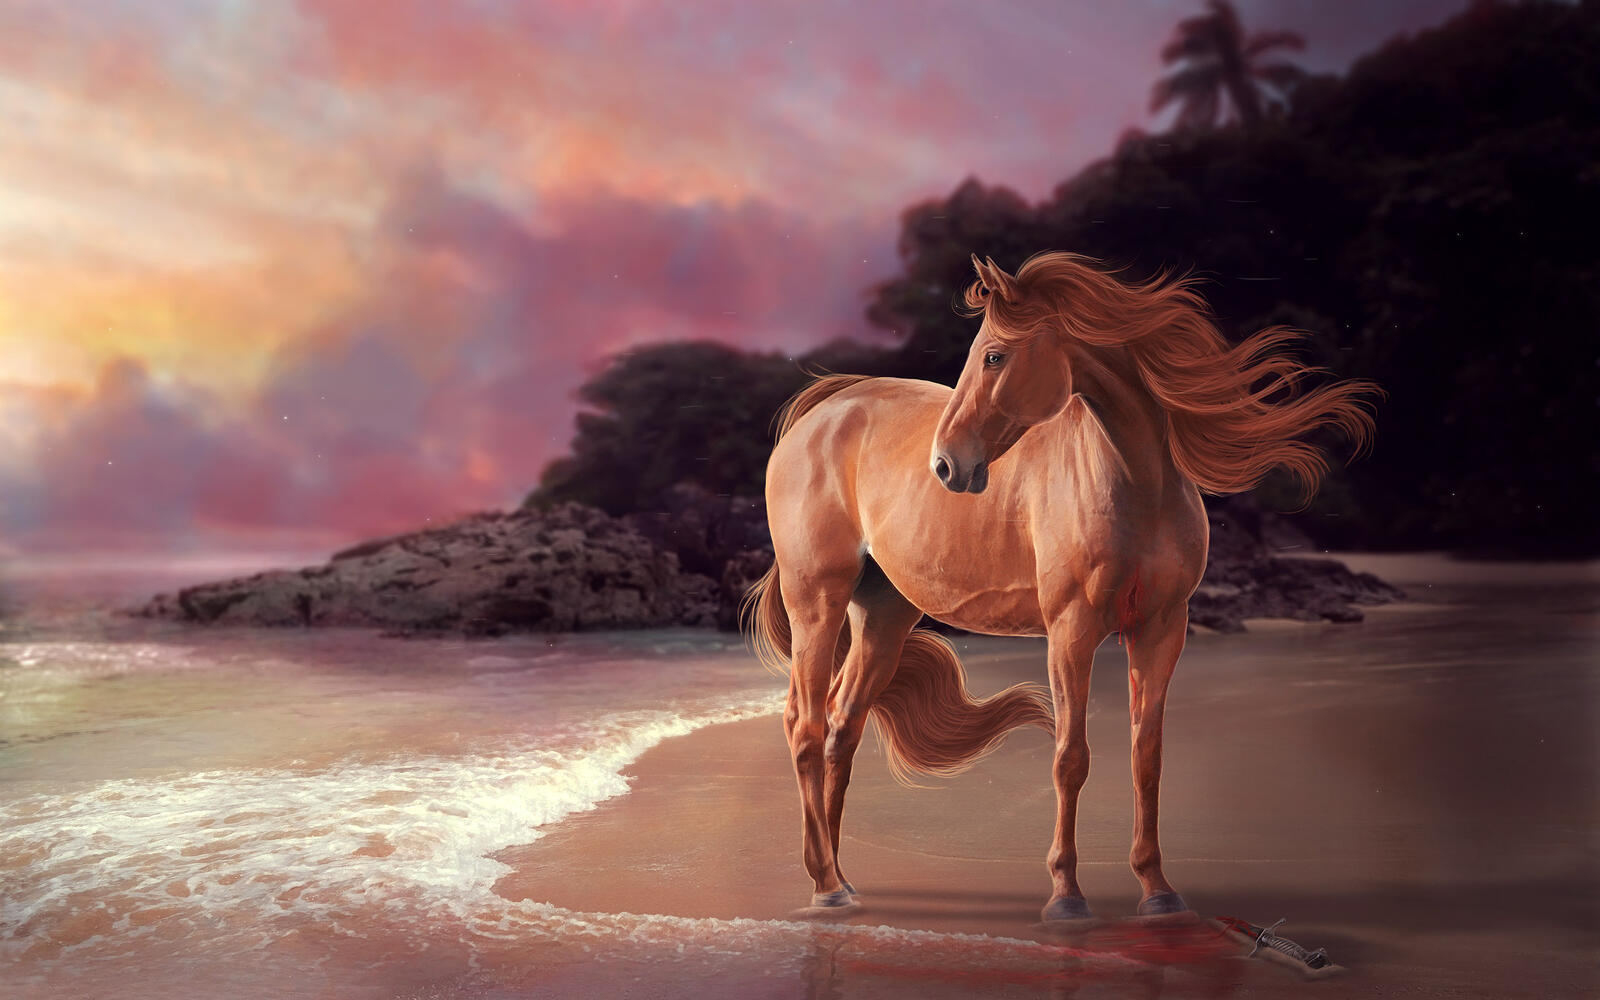 Wallpapers horse animals artist on the desktop